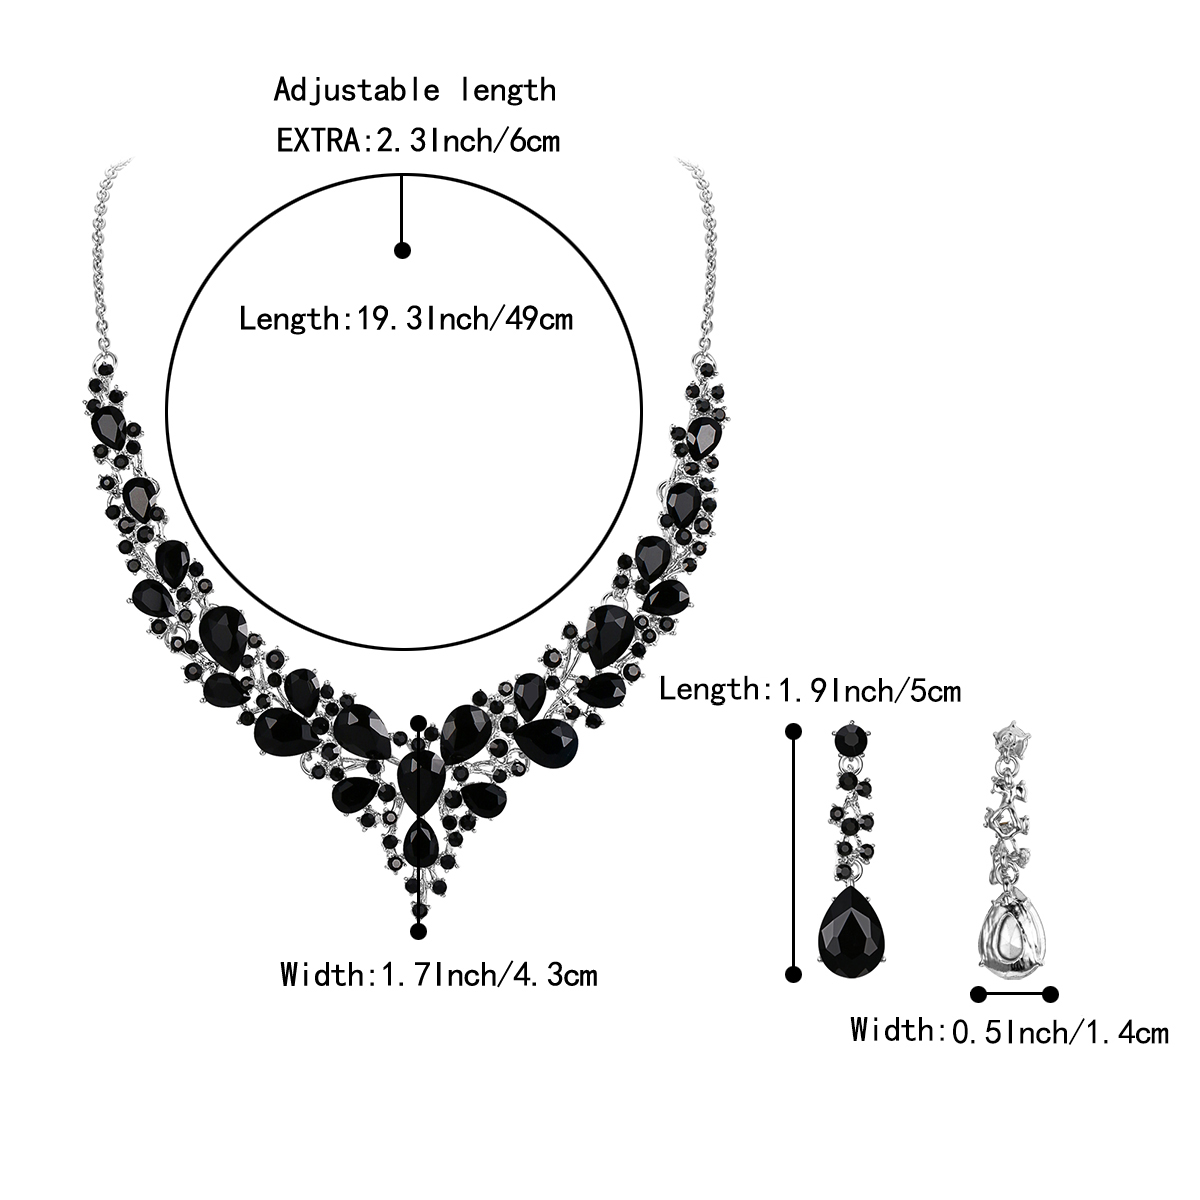 Wedure Wedding Bridal Necklace Earrings Jewelry Set for Women, Austrian Crystal Teardrop Cluster Statement Necklace Dangle Earrings Set Black Silver-Tone - image 5 of 5